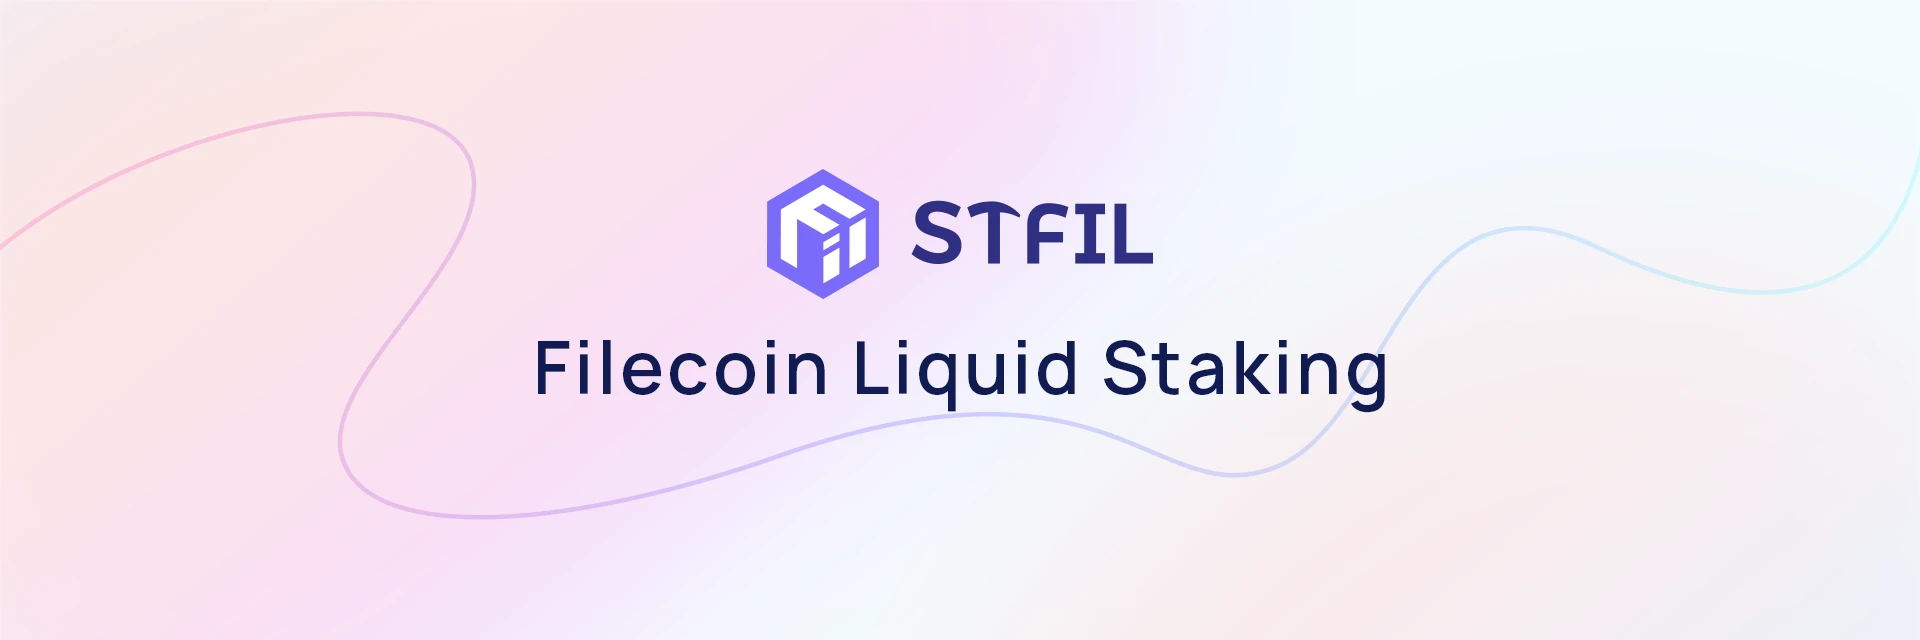 一文了解STFIL：无需锁仓的Filecoin Liquid Staking